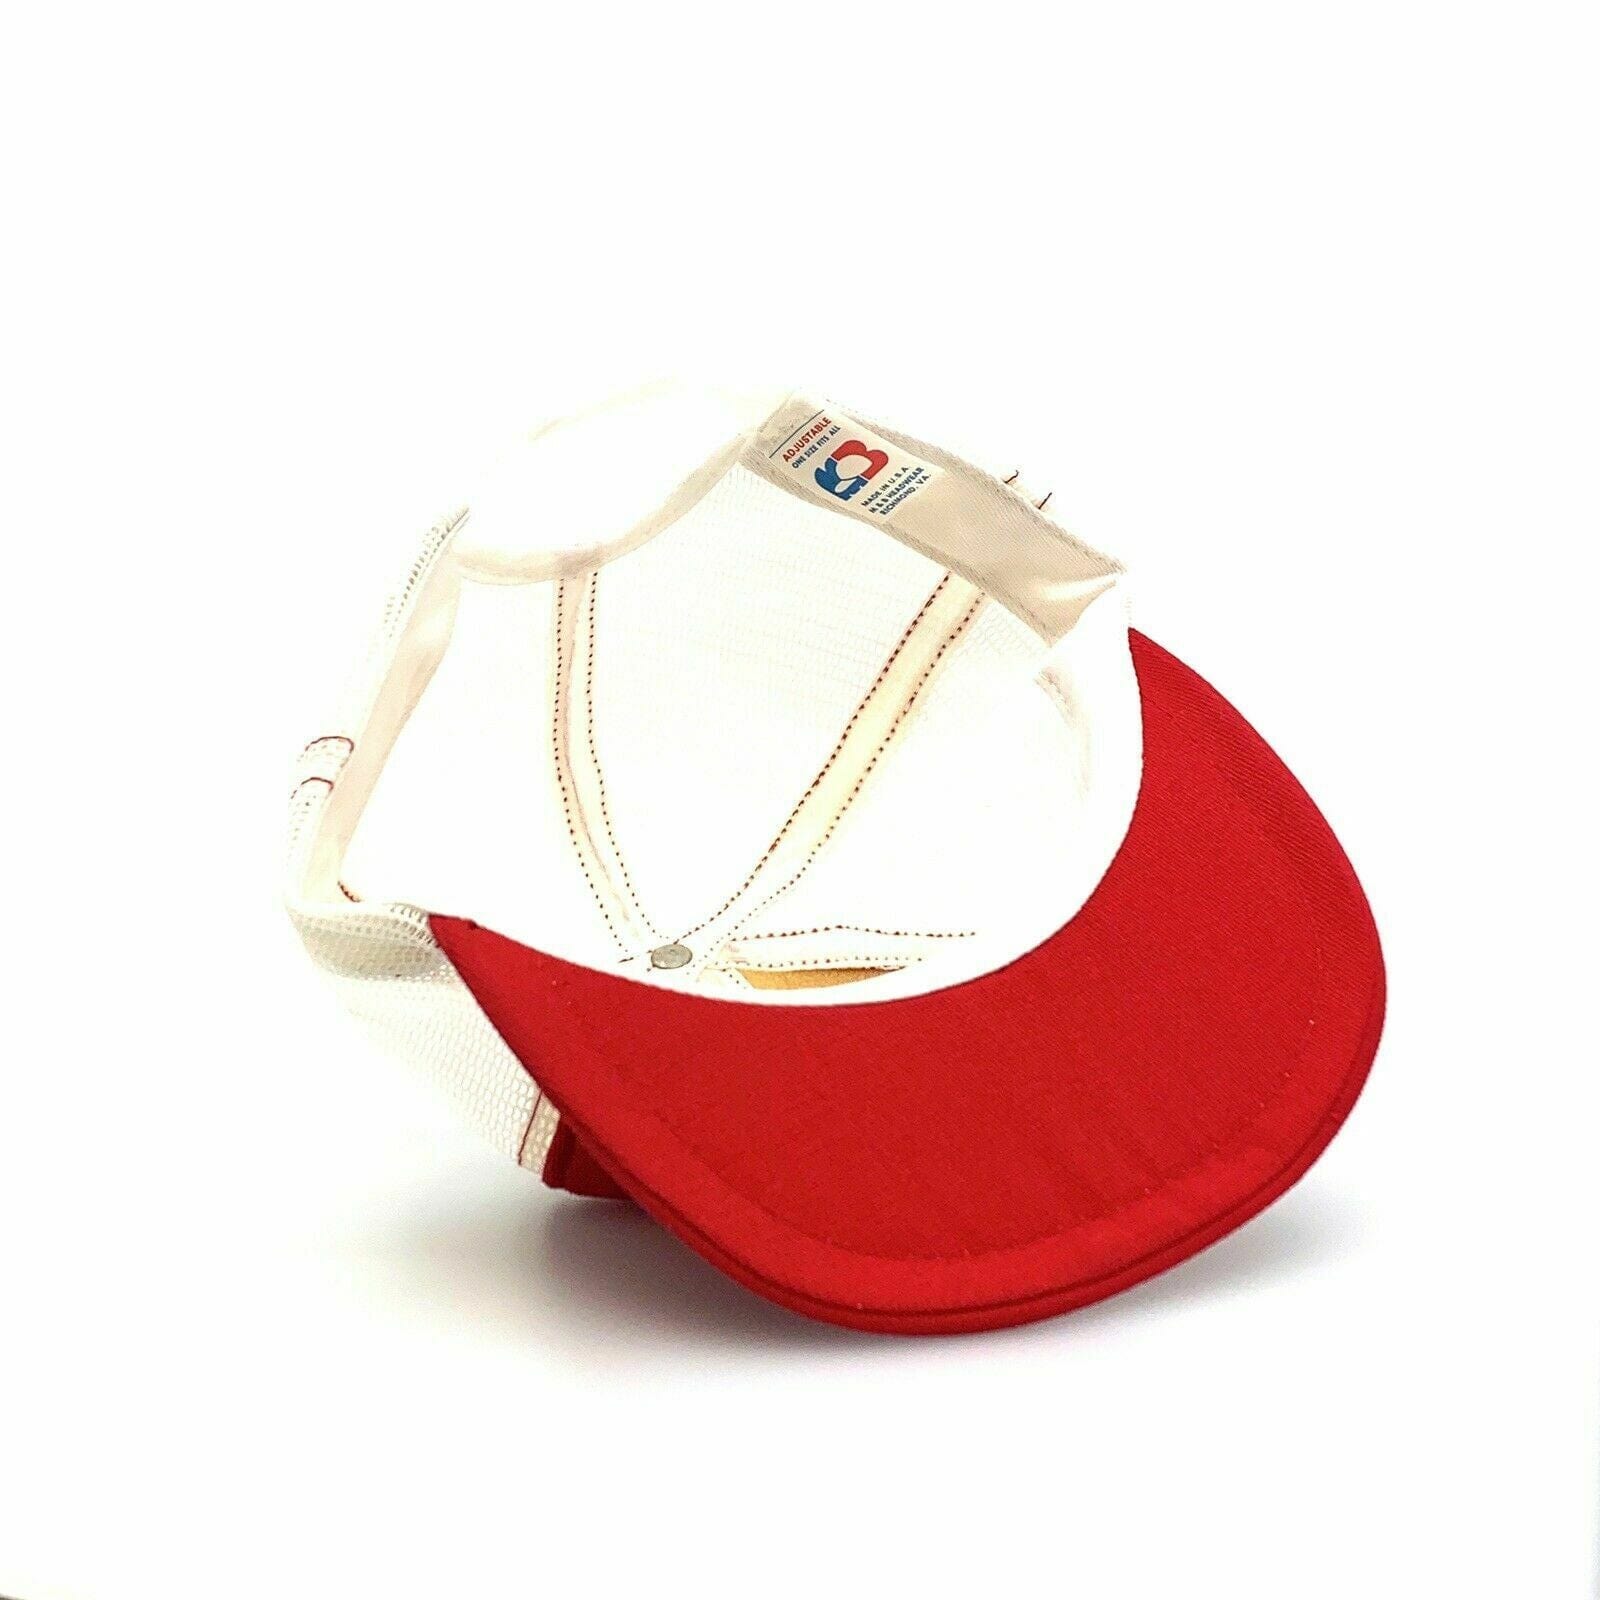 M&B Brand OLD MILWAUKEE BEER SnapBack Mesh Trucker Hat, Red / White - Adjustable - parsimonyshoppes